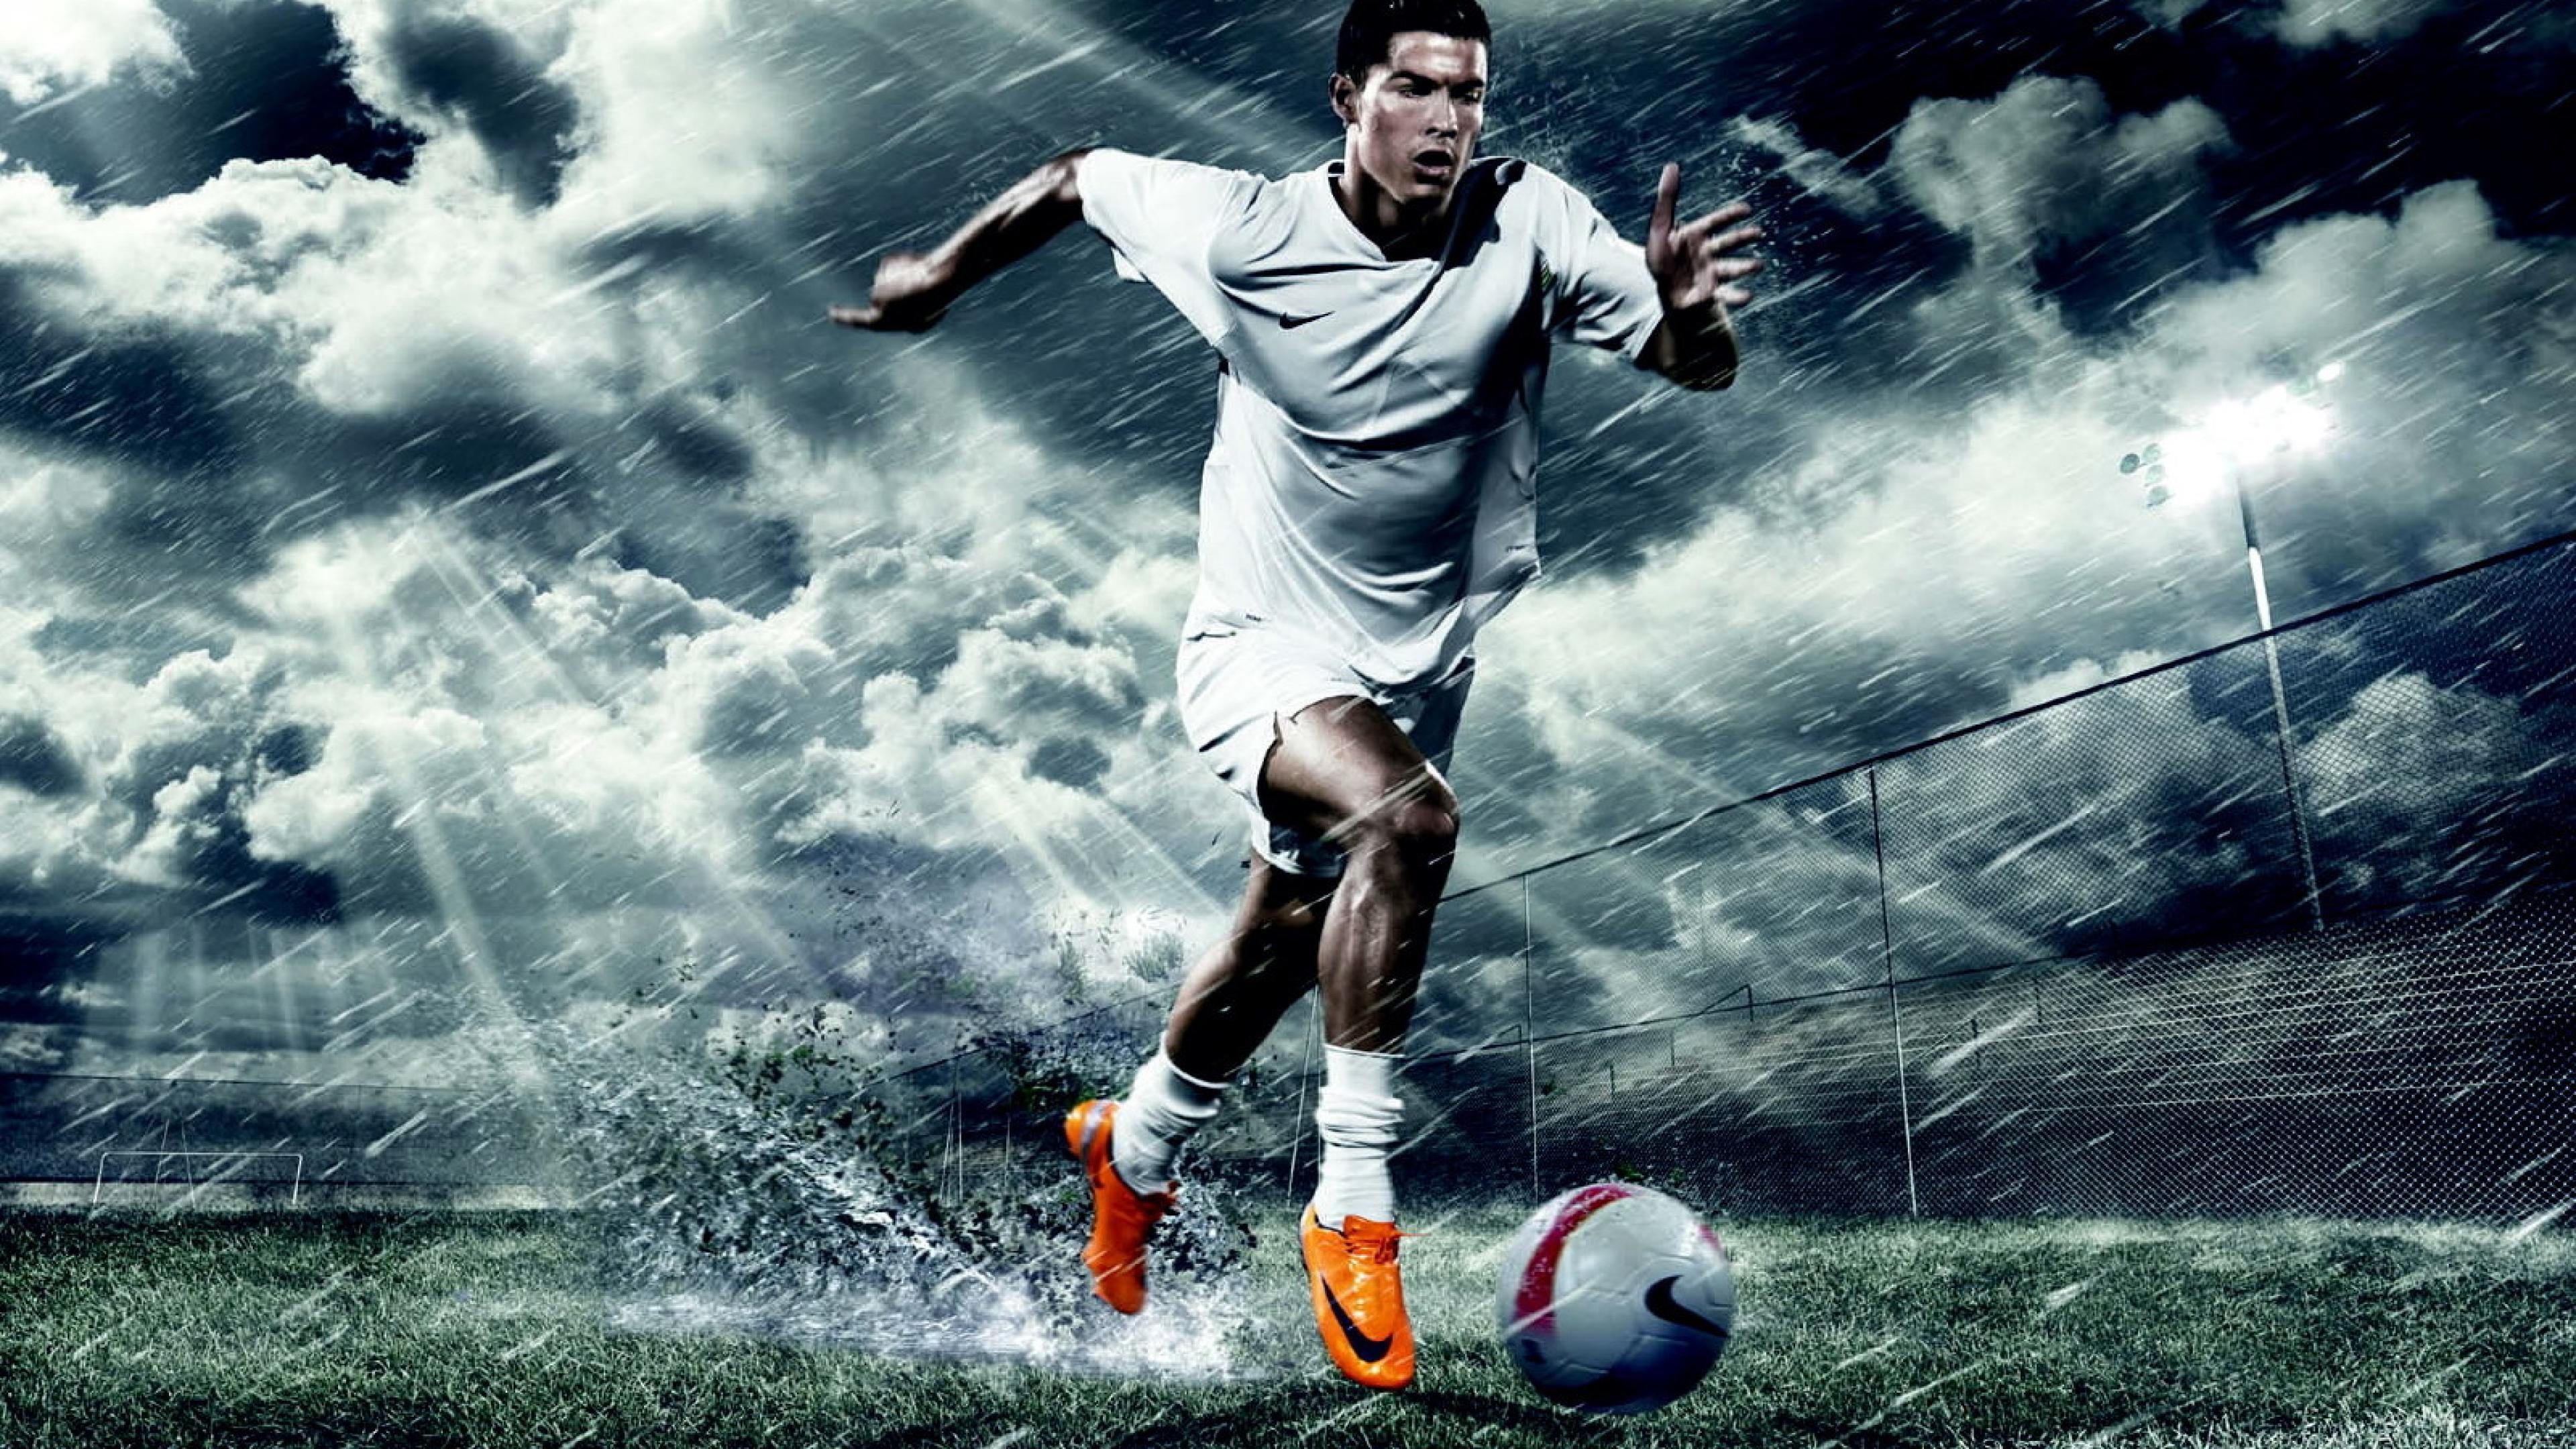 Cristiano Ronaldo FIFA footballer HD wallpaper and image (7)